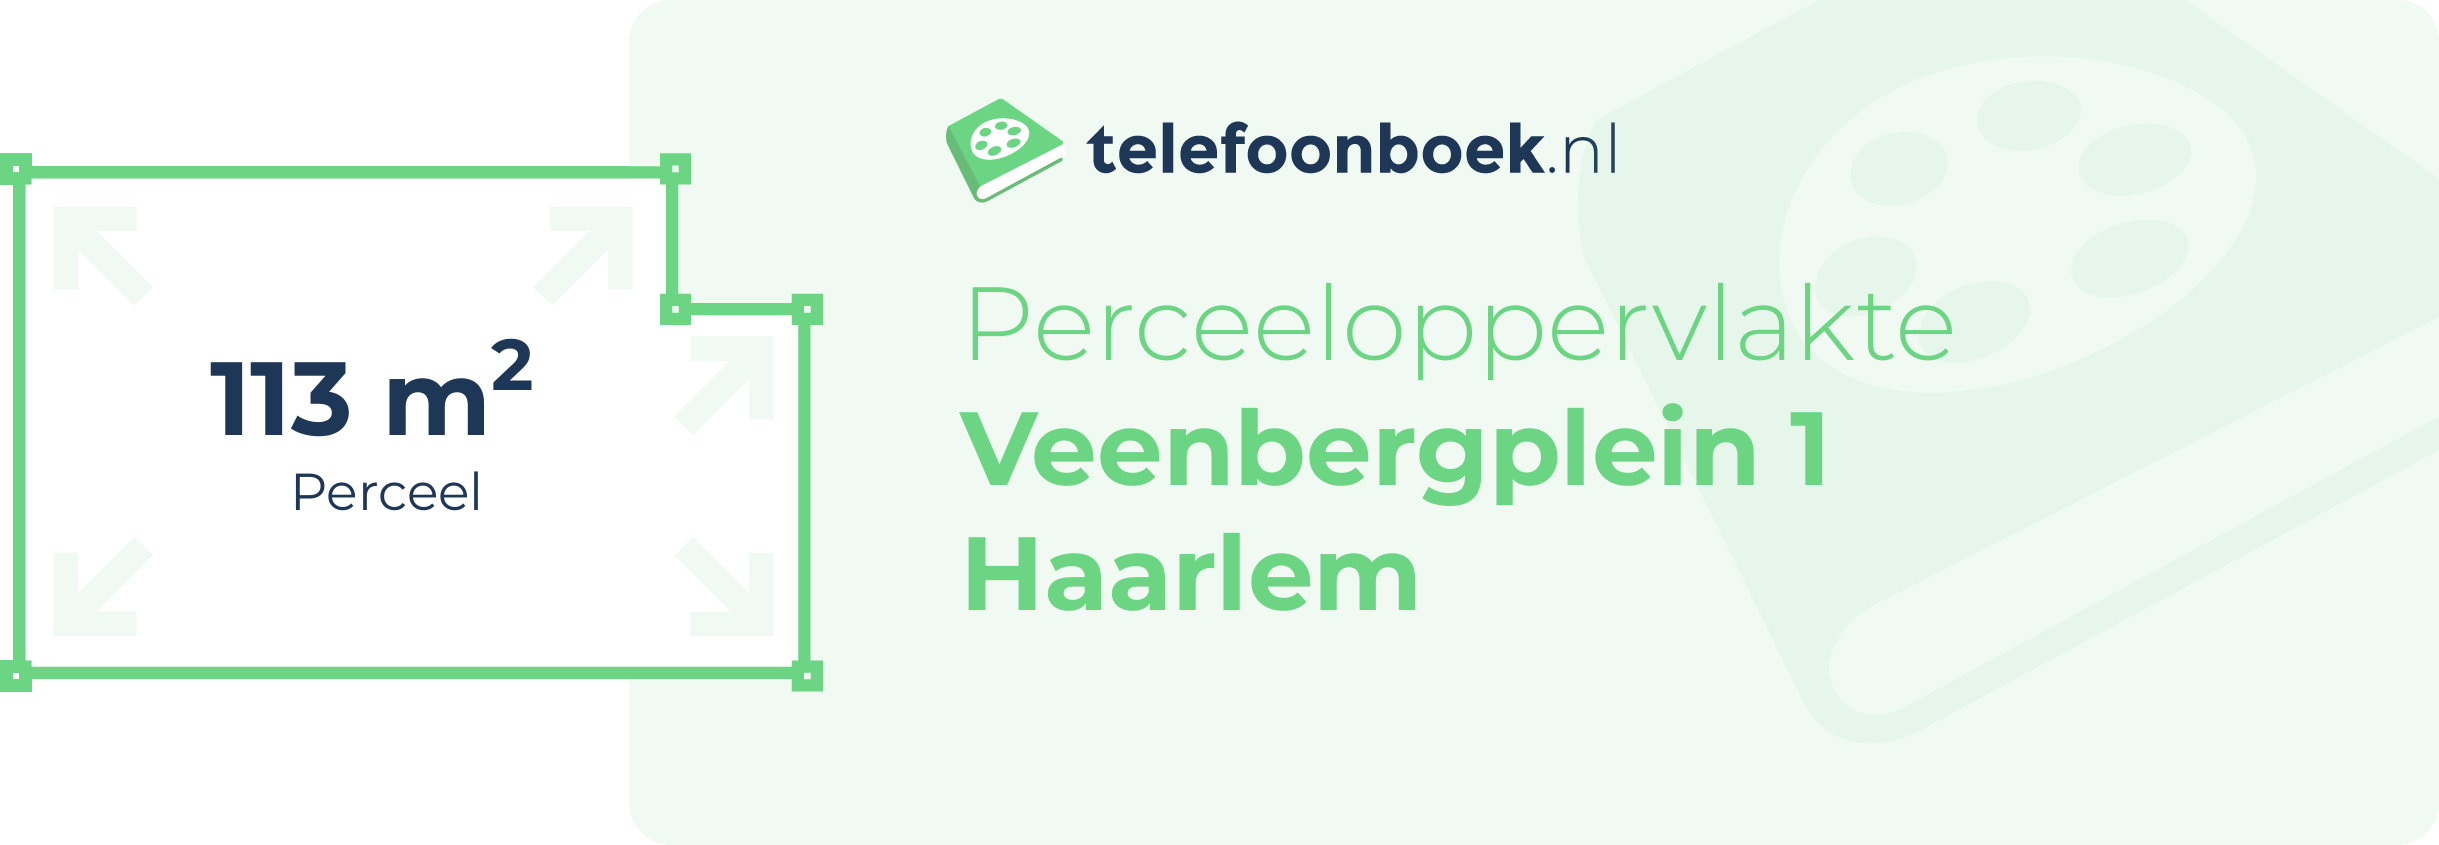 Perceeloppervlakte Veenbergplein 1 Haarlem